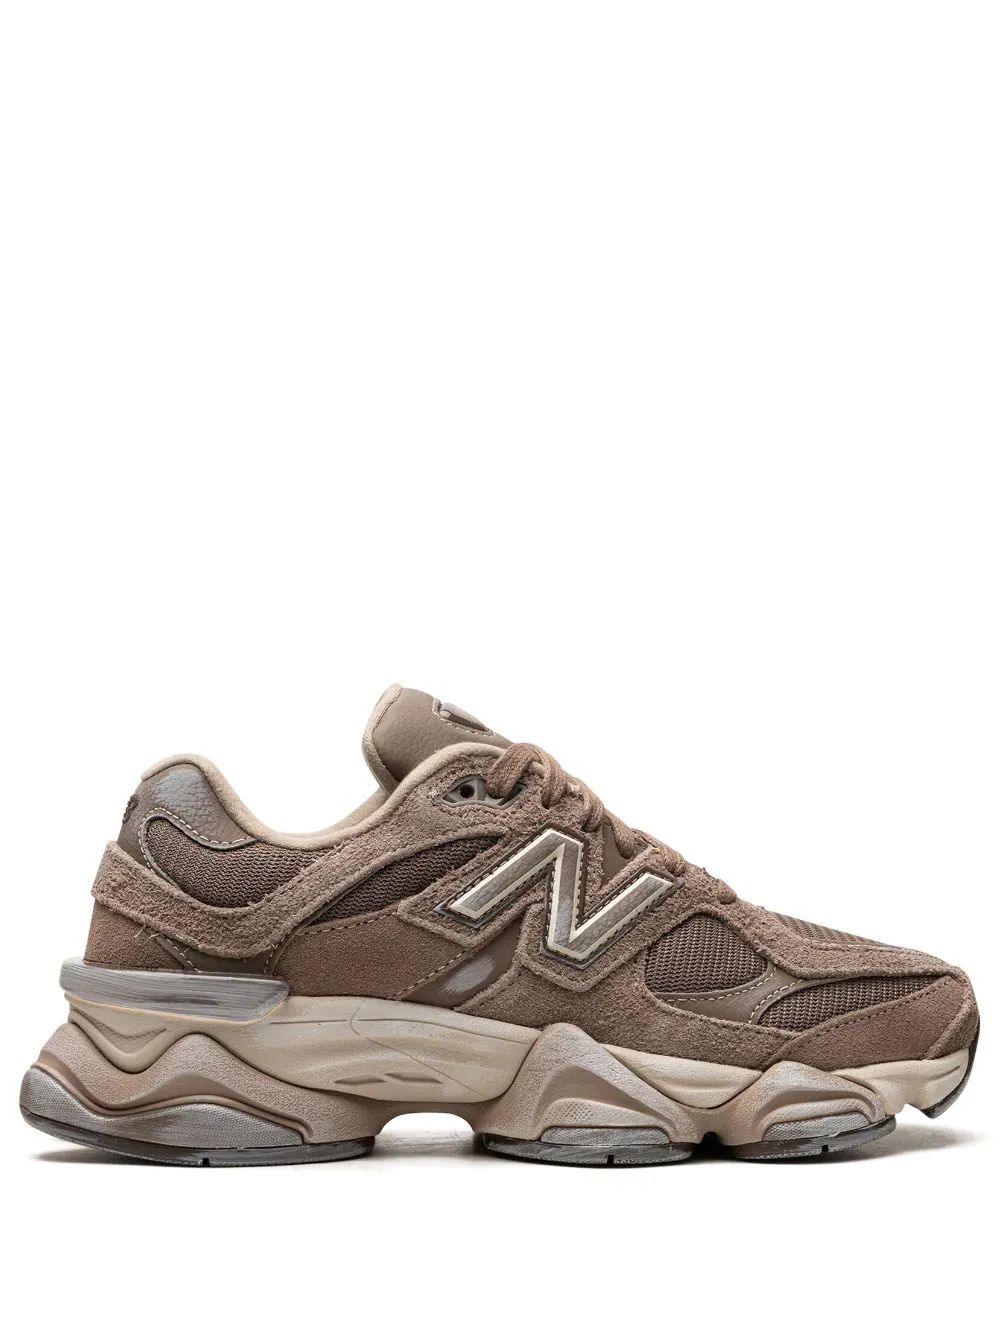 New Balance 9060 "Mushroom Brown" Sneakers - Farfetch | Farfetch Global